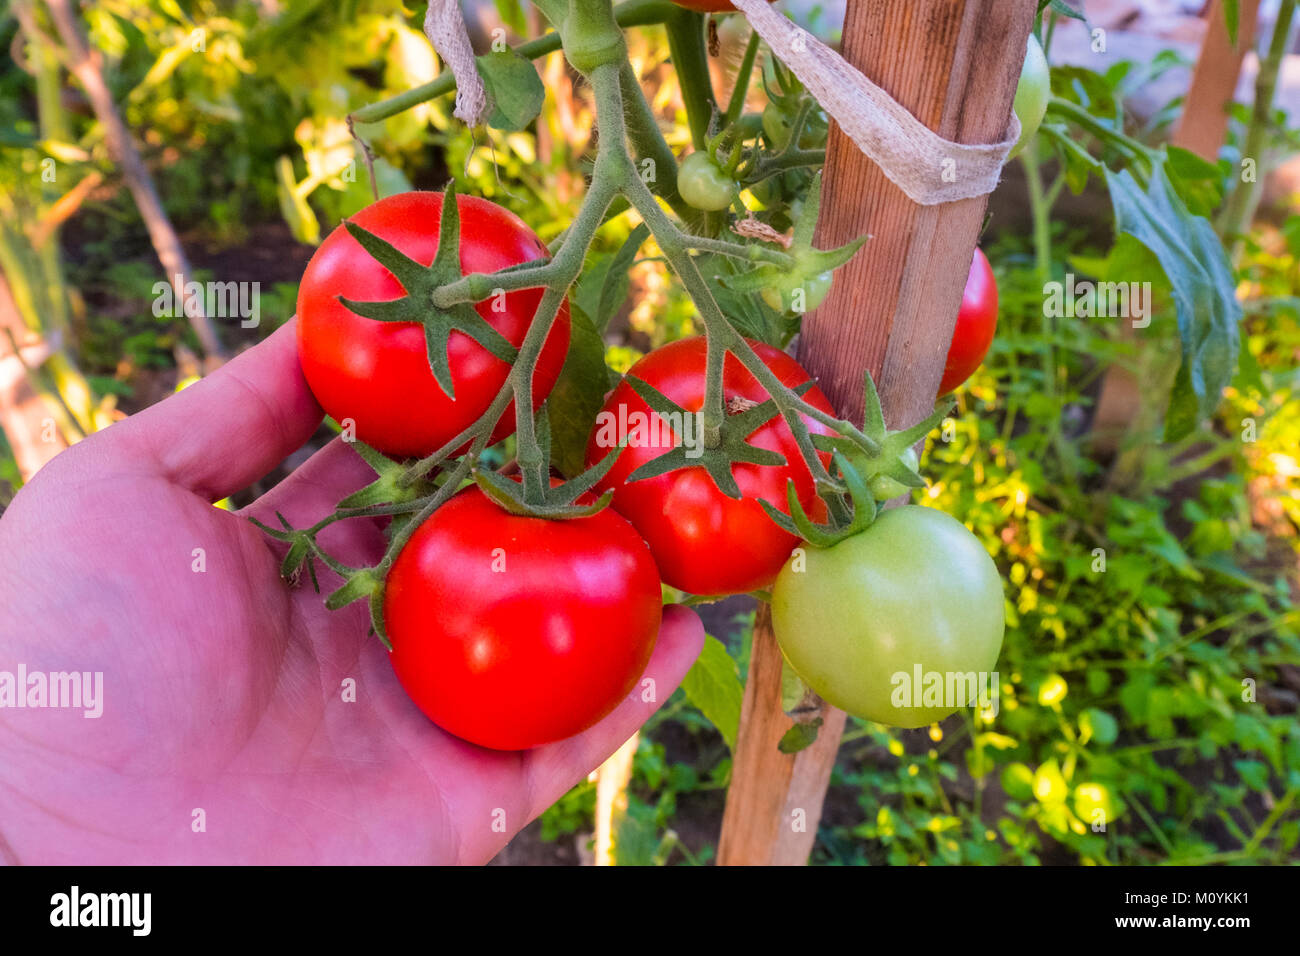 Mano sujetando los tomates en la vid Foto de stock